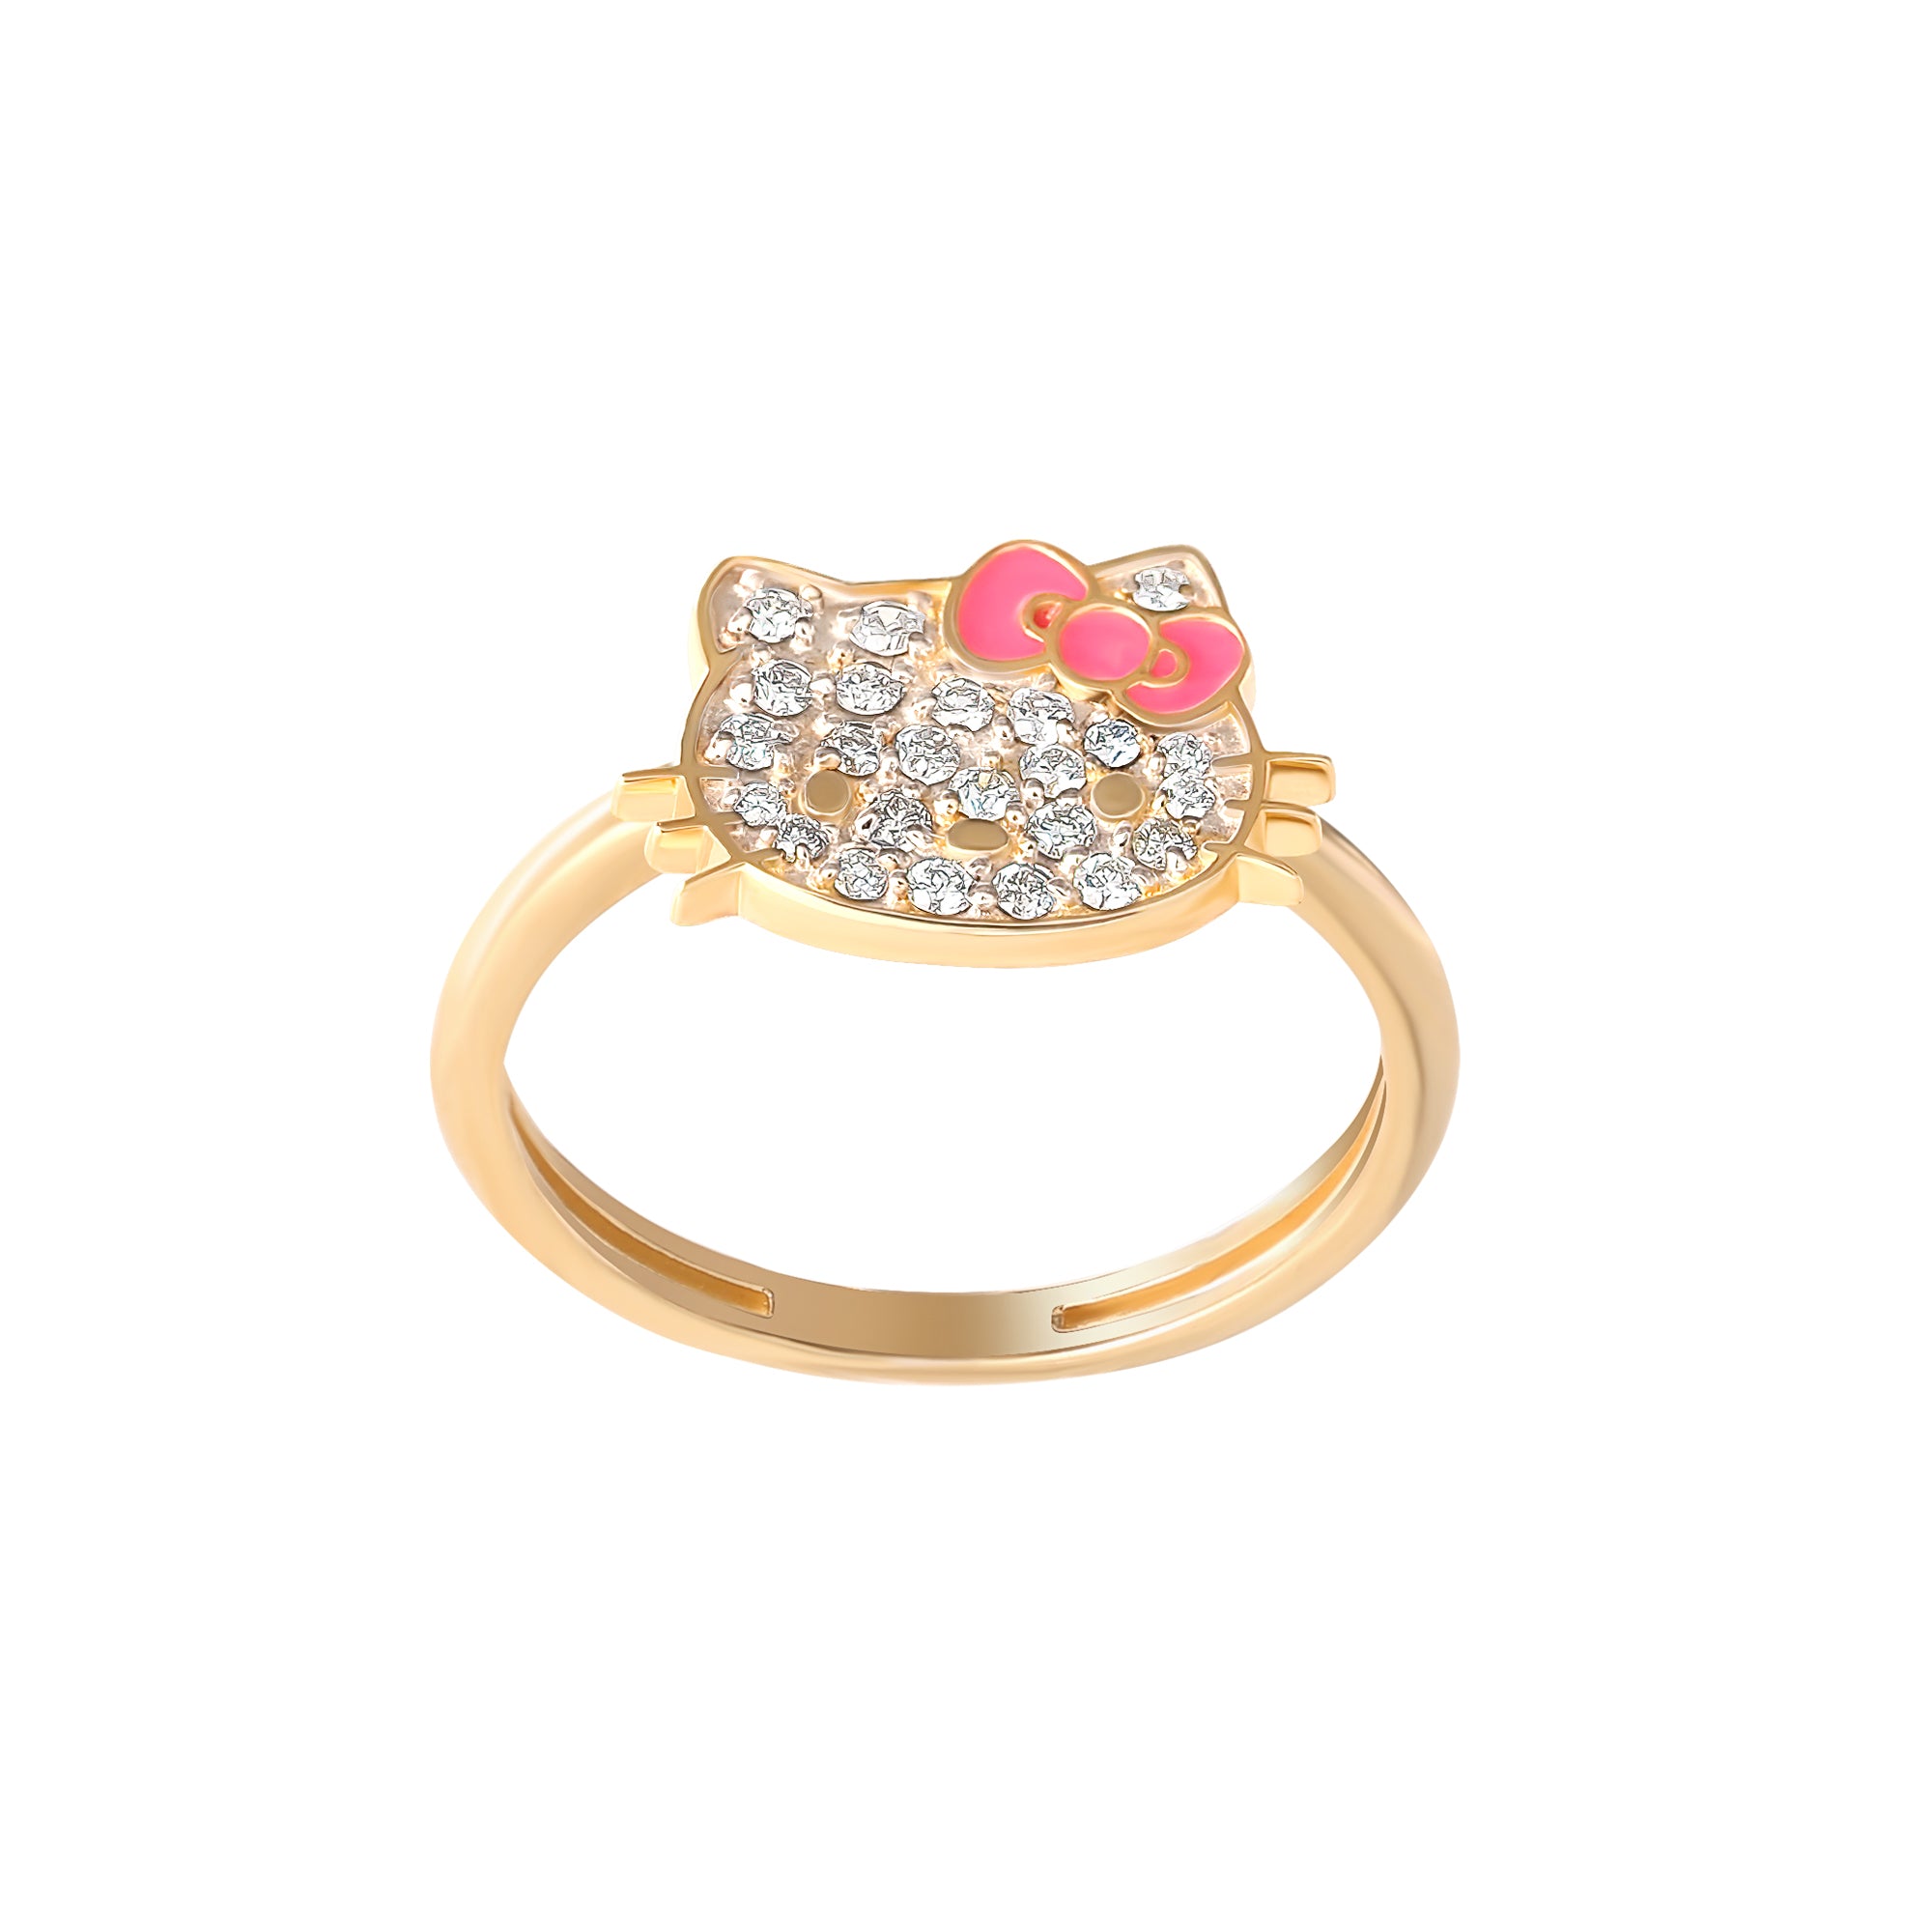 Hello Kitty 14K Yellow Gold Pavé Diamond Ring With Enamel Bow (Size 7 Only) Jewelry JACMEL JEWELRY INC   